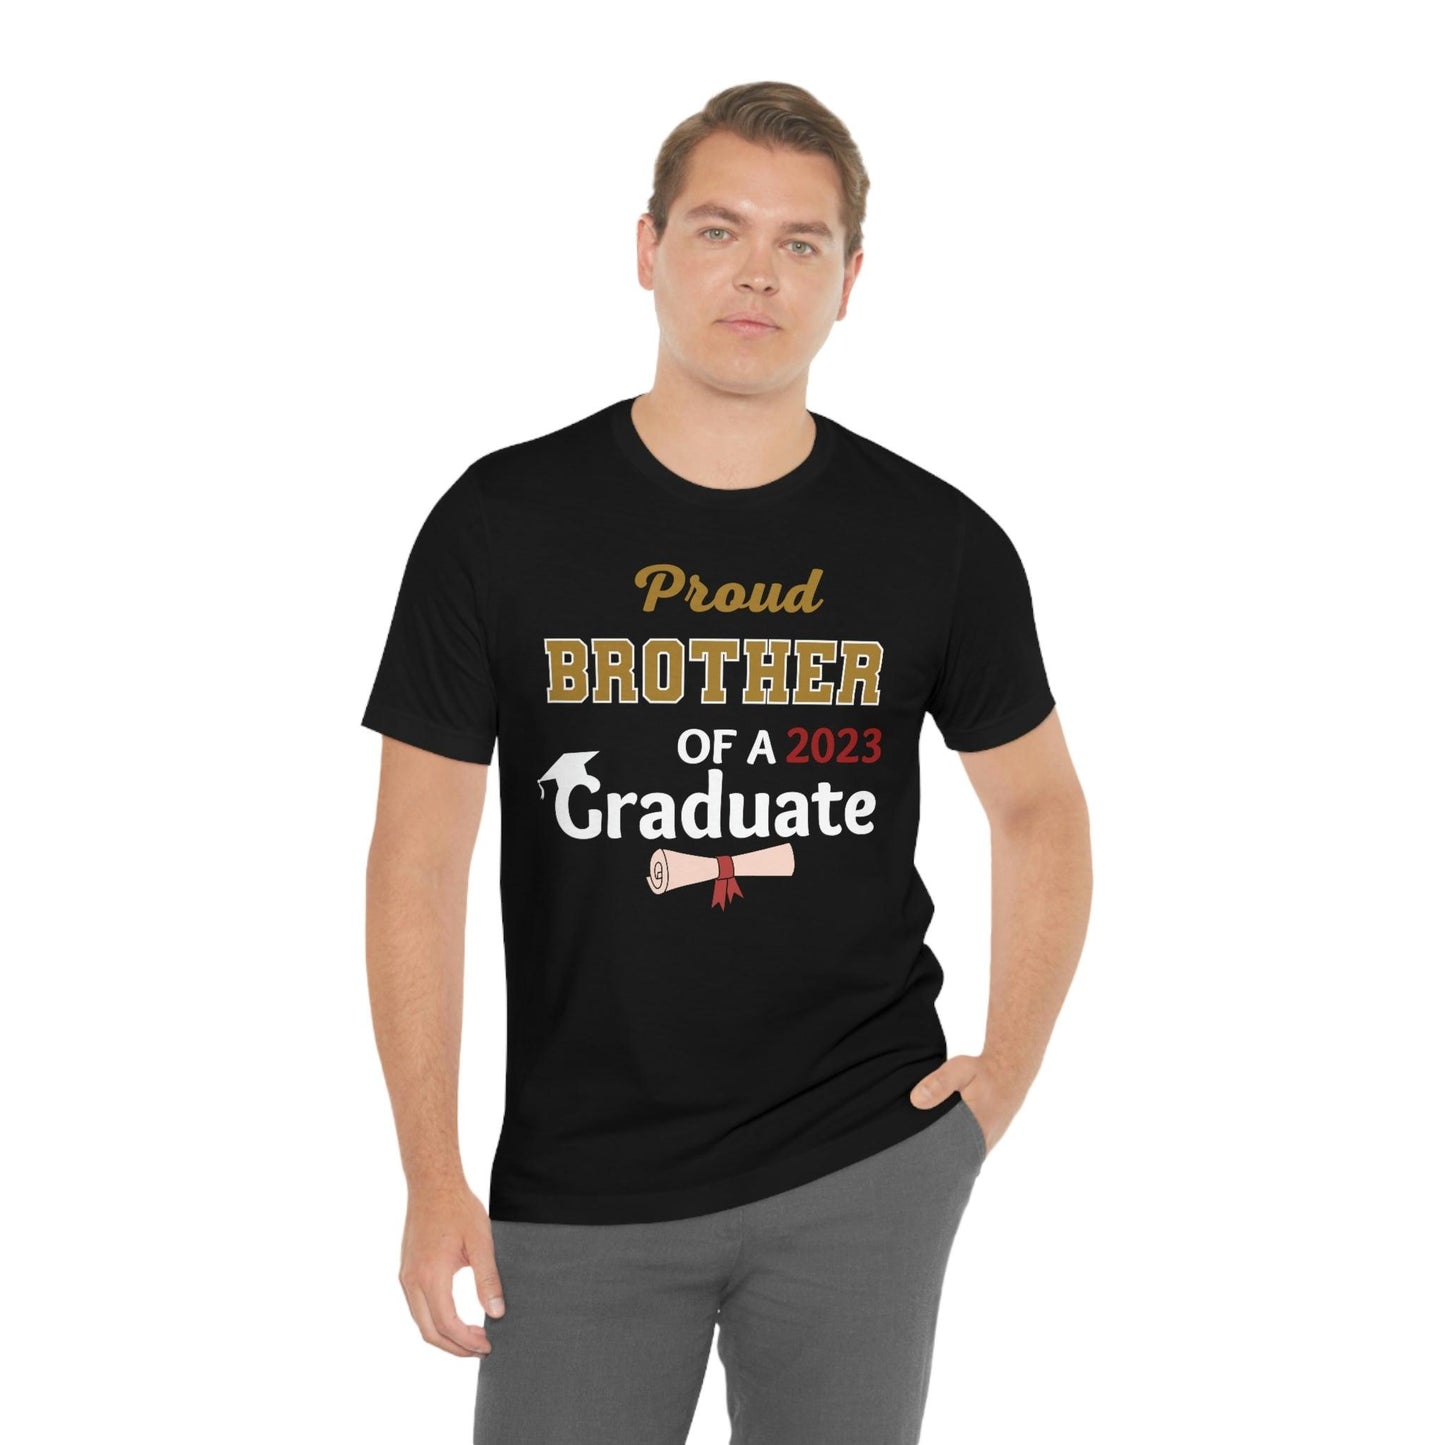 Proud Brother of a Graduate shirt - Graduation shirt - Graduation gift